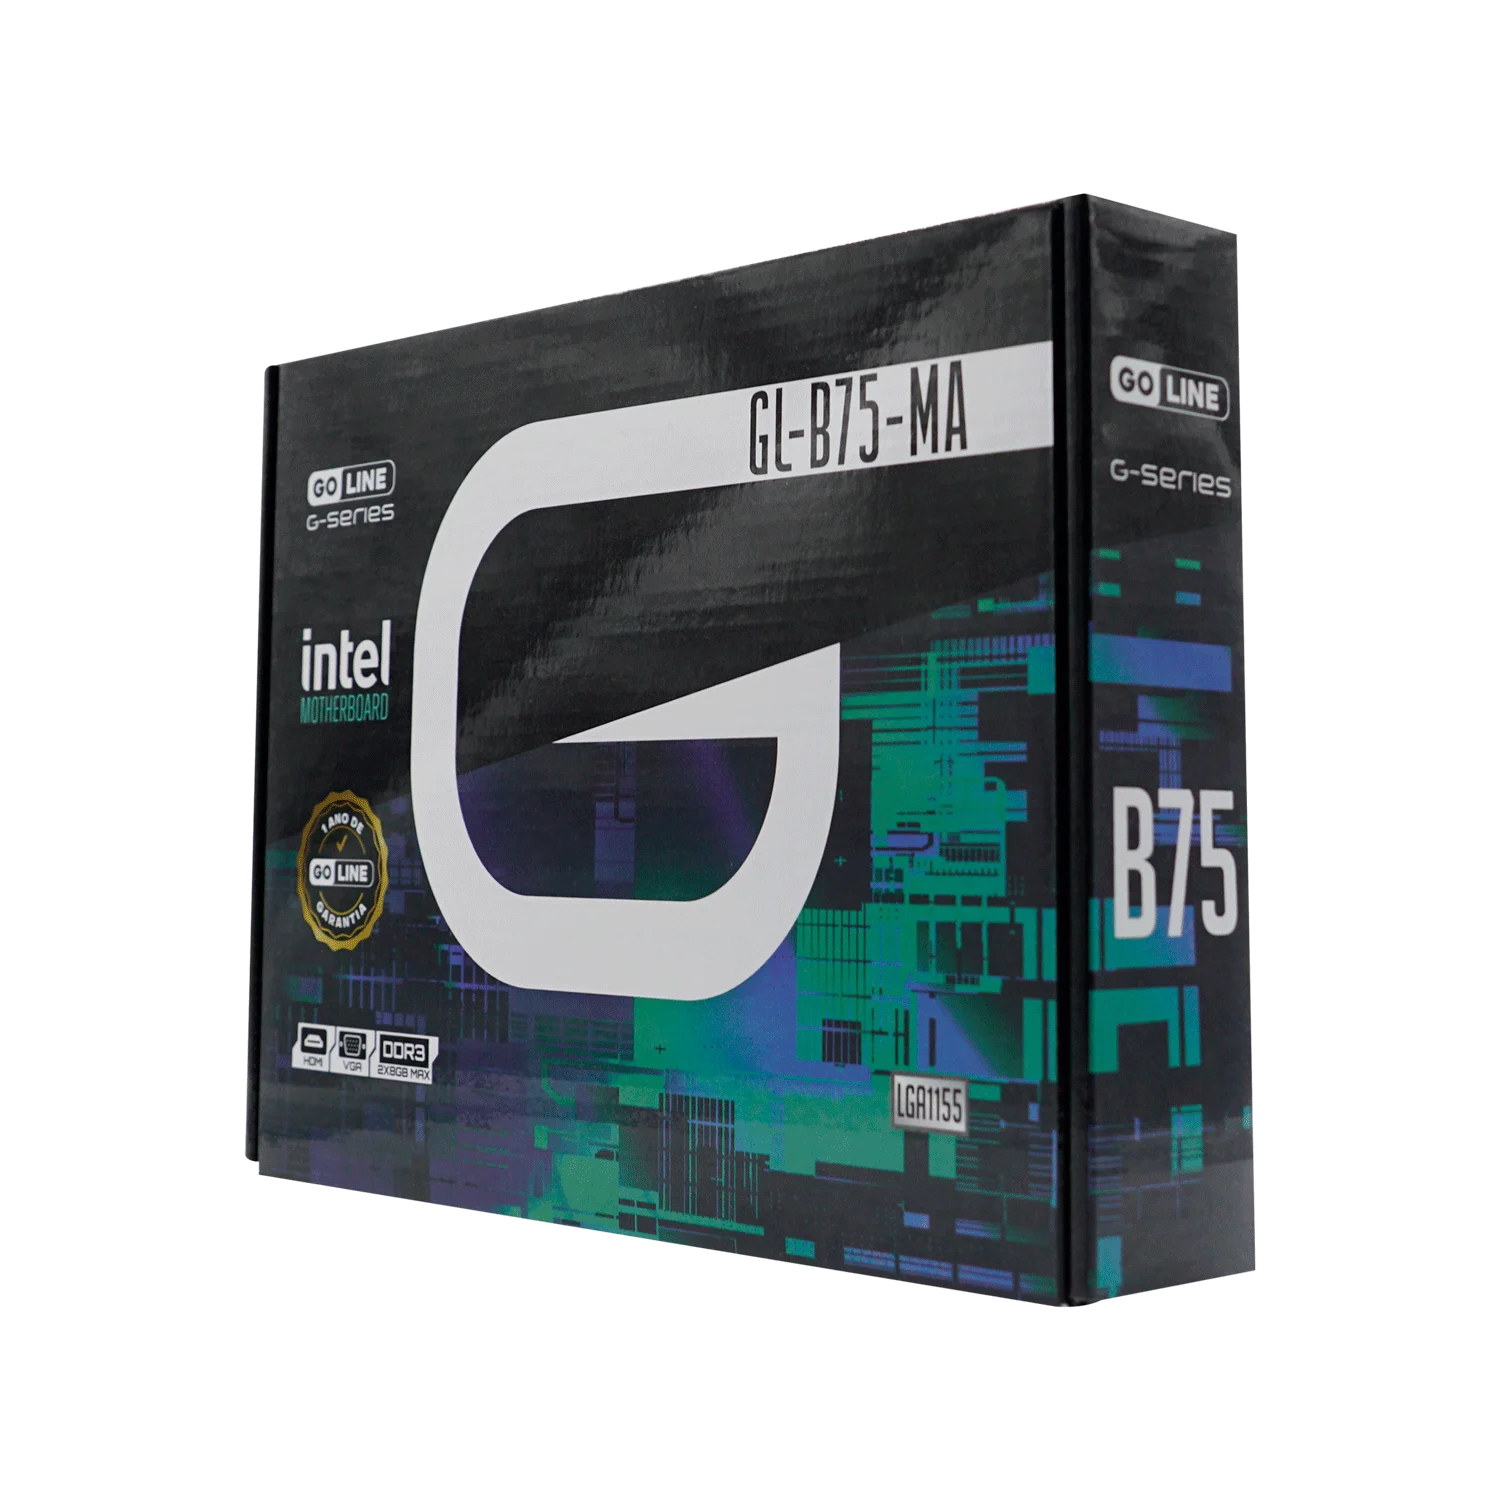 Placa Mãe Goline B75 GL-B75-MA Soquete LGA 1155 Chipset Intel B75
Micro ATX (1 Ano de Garantia)